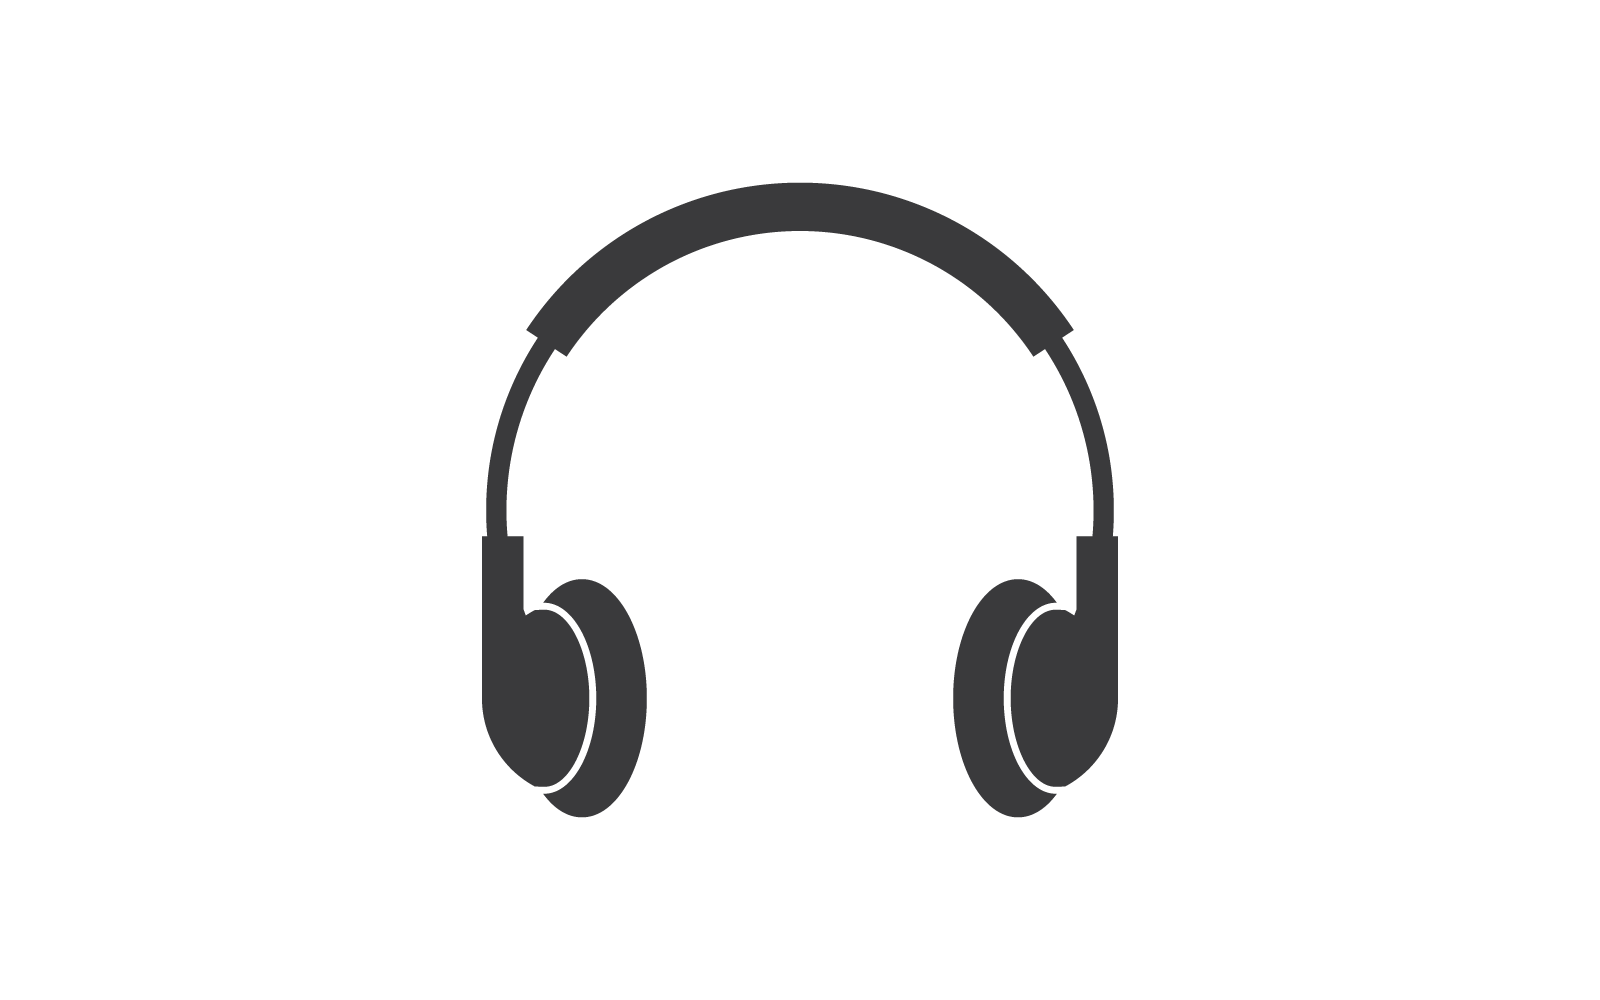 Hörlurar, hörlurar design illustration ikon vektor